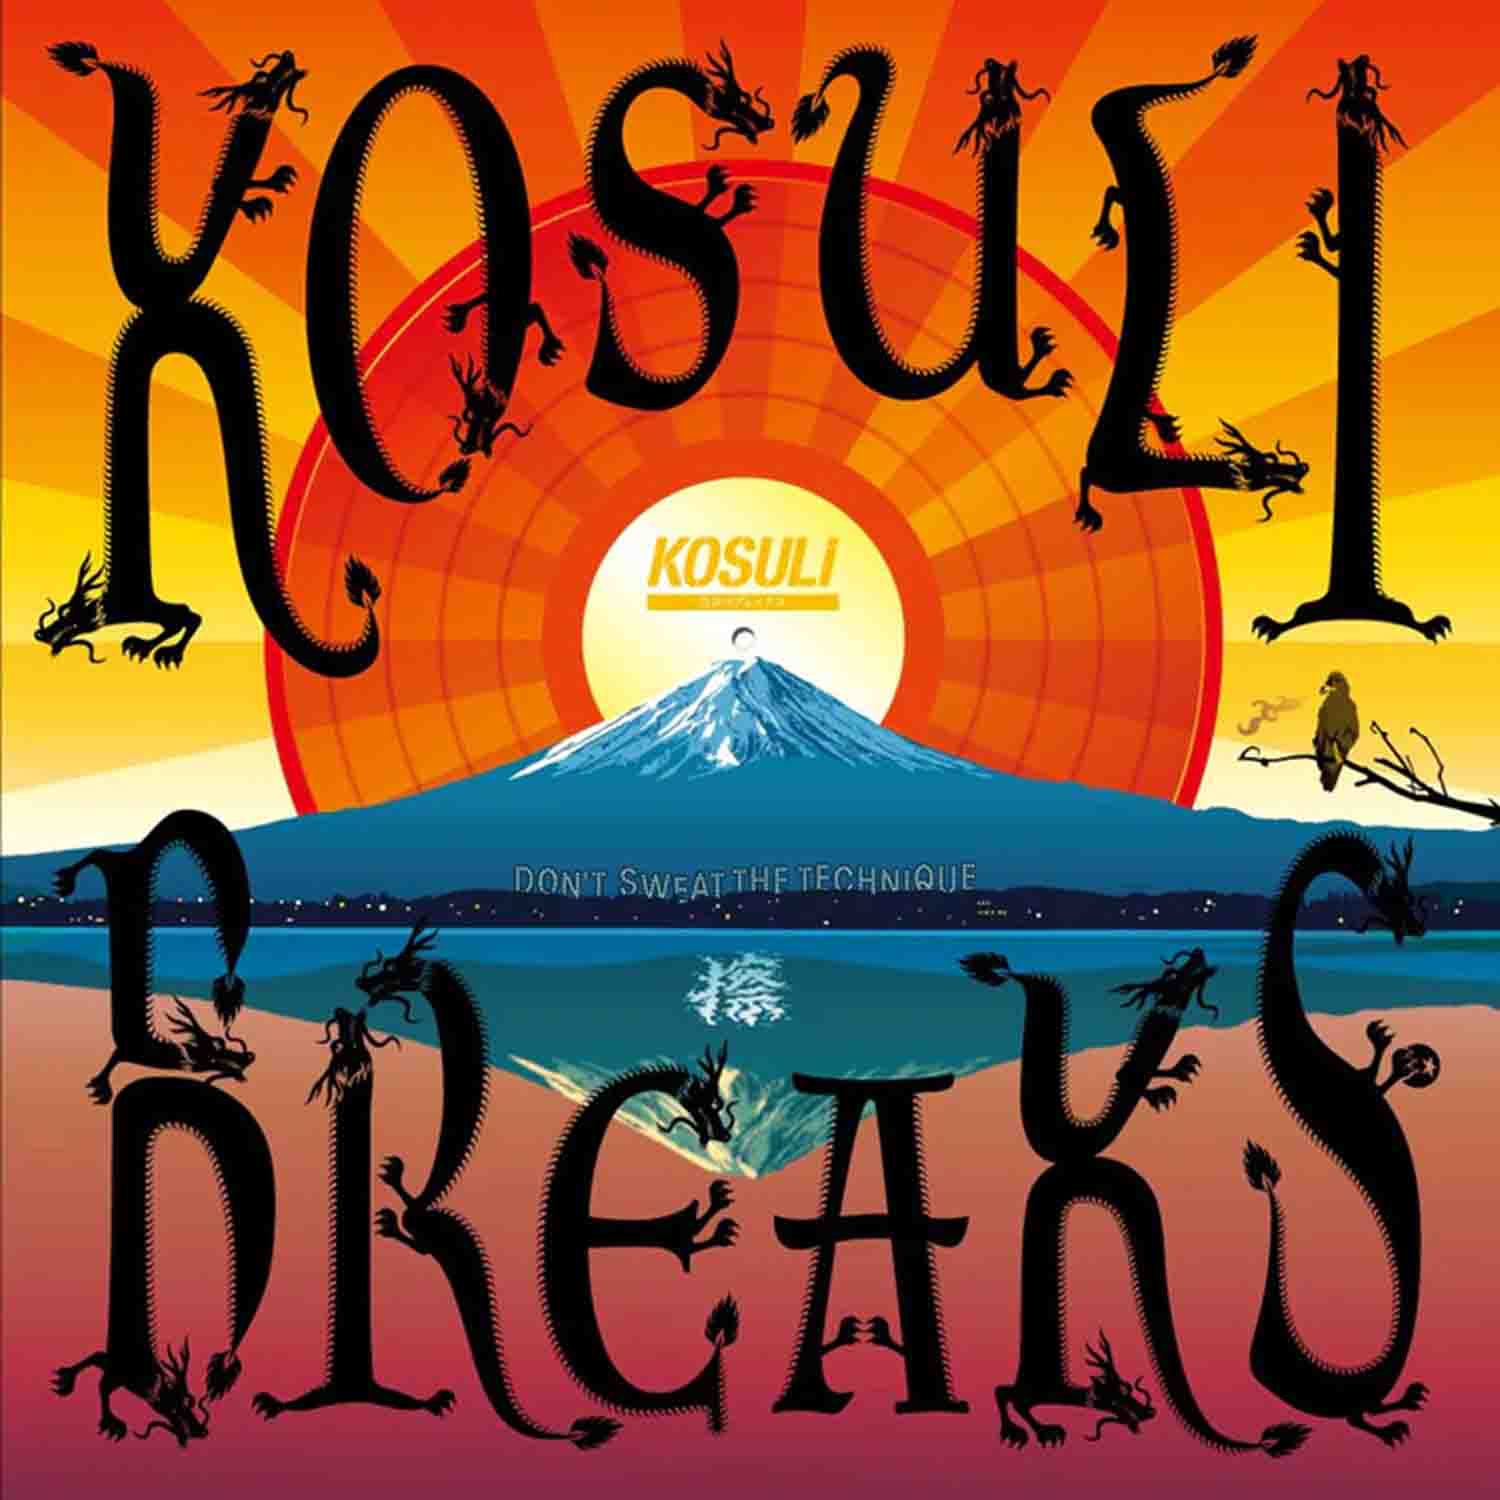 Stokyo Kosuli Breaks 12" Vinyl - Hollywood DJ